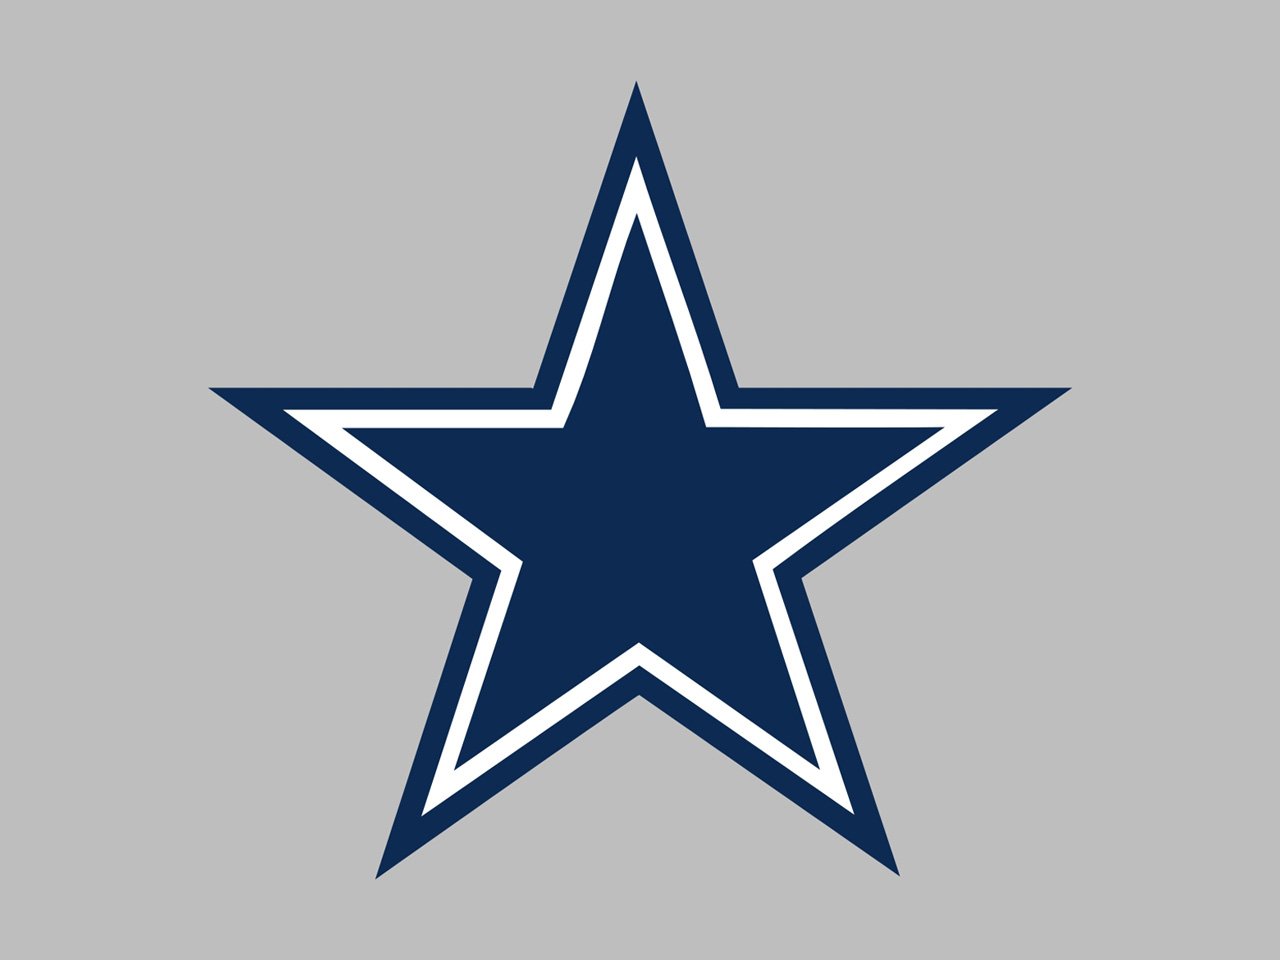 Dallas cowboy logo clipart